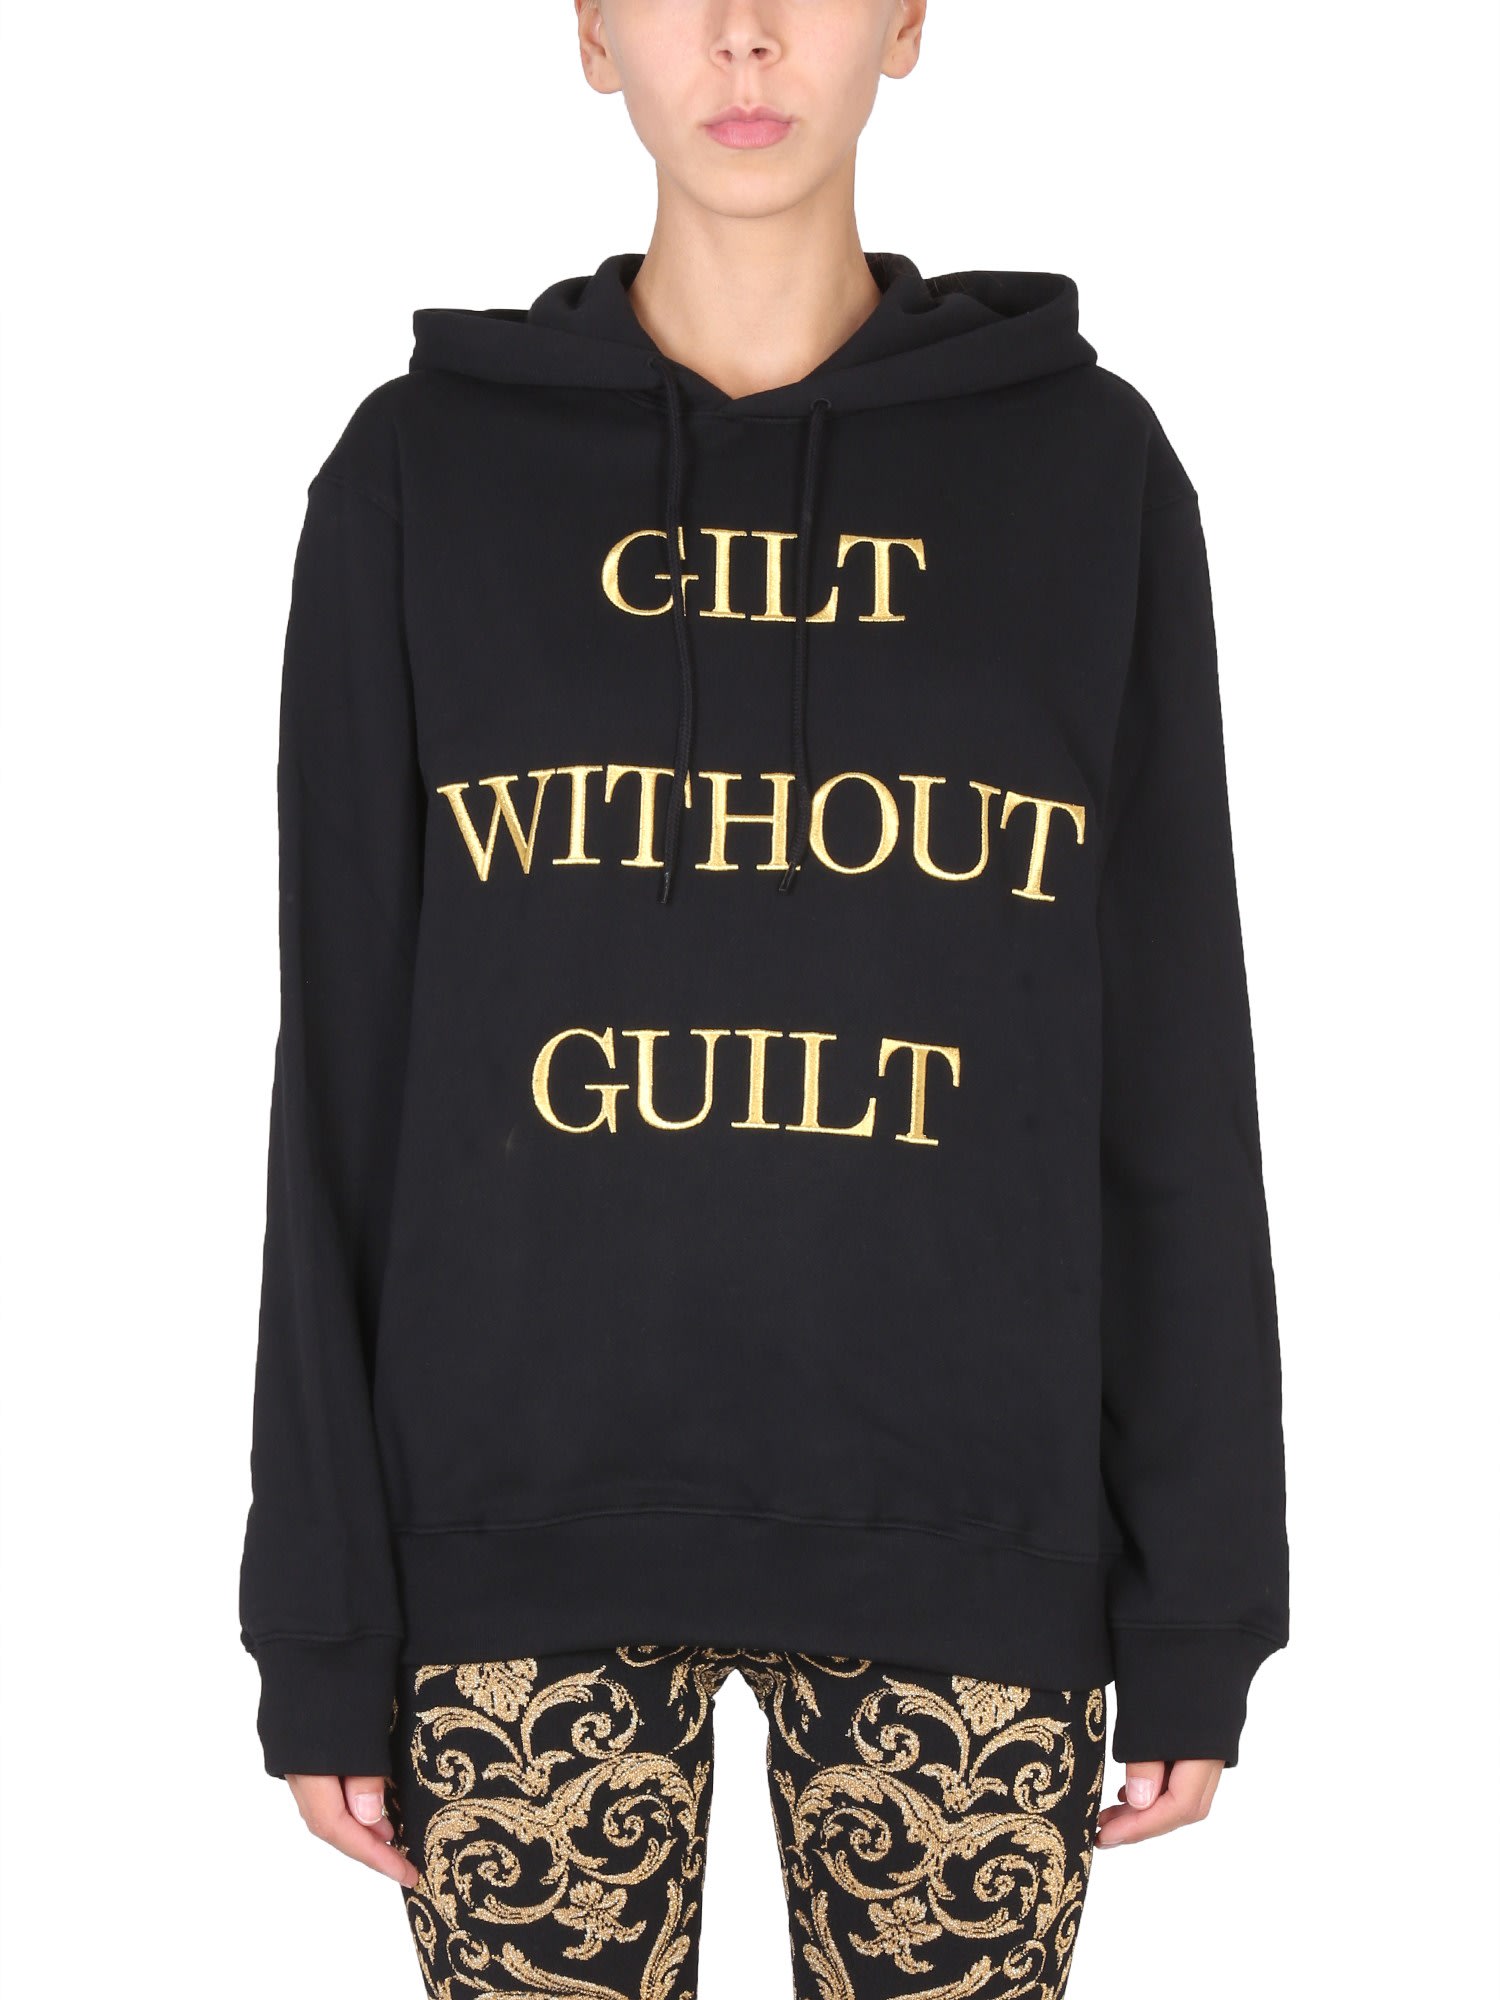 Moschino Gilt Without Guilt Sweatshirt